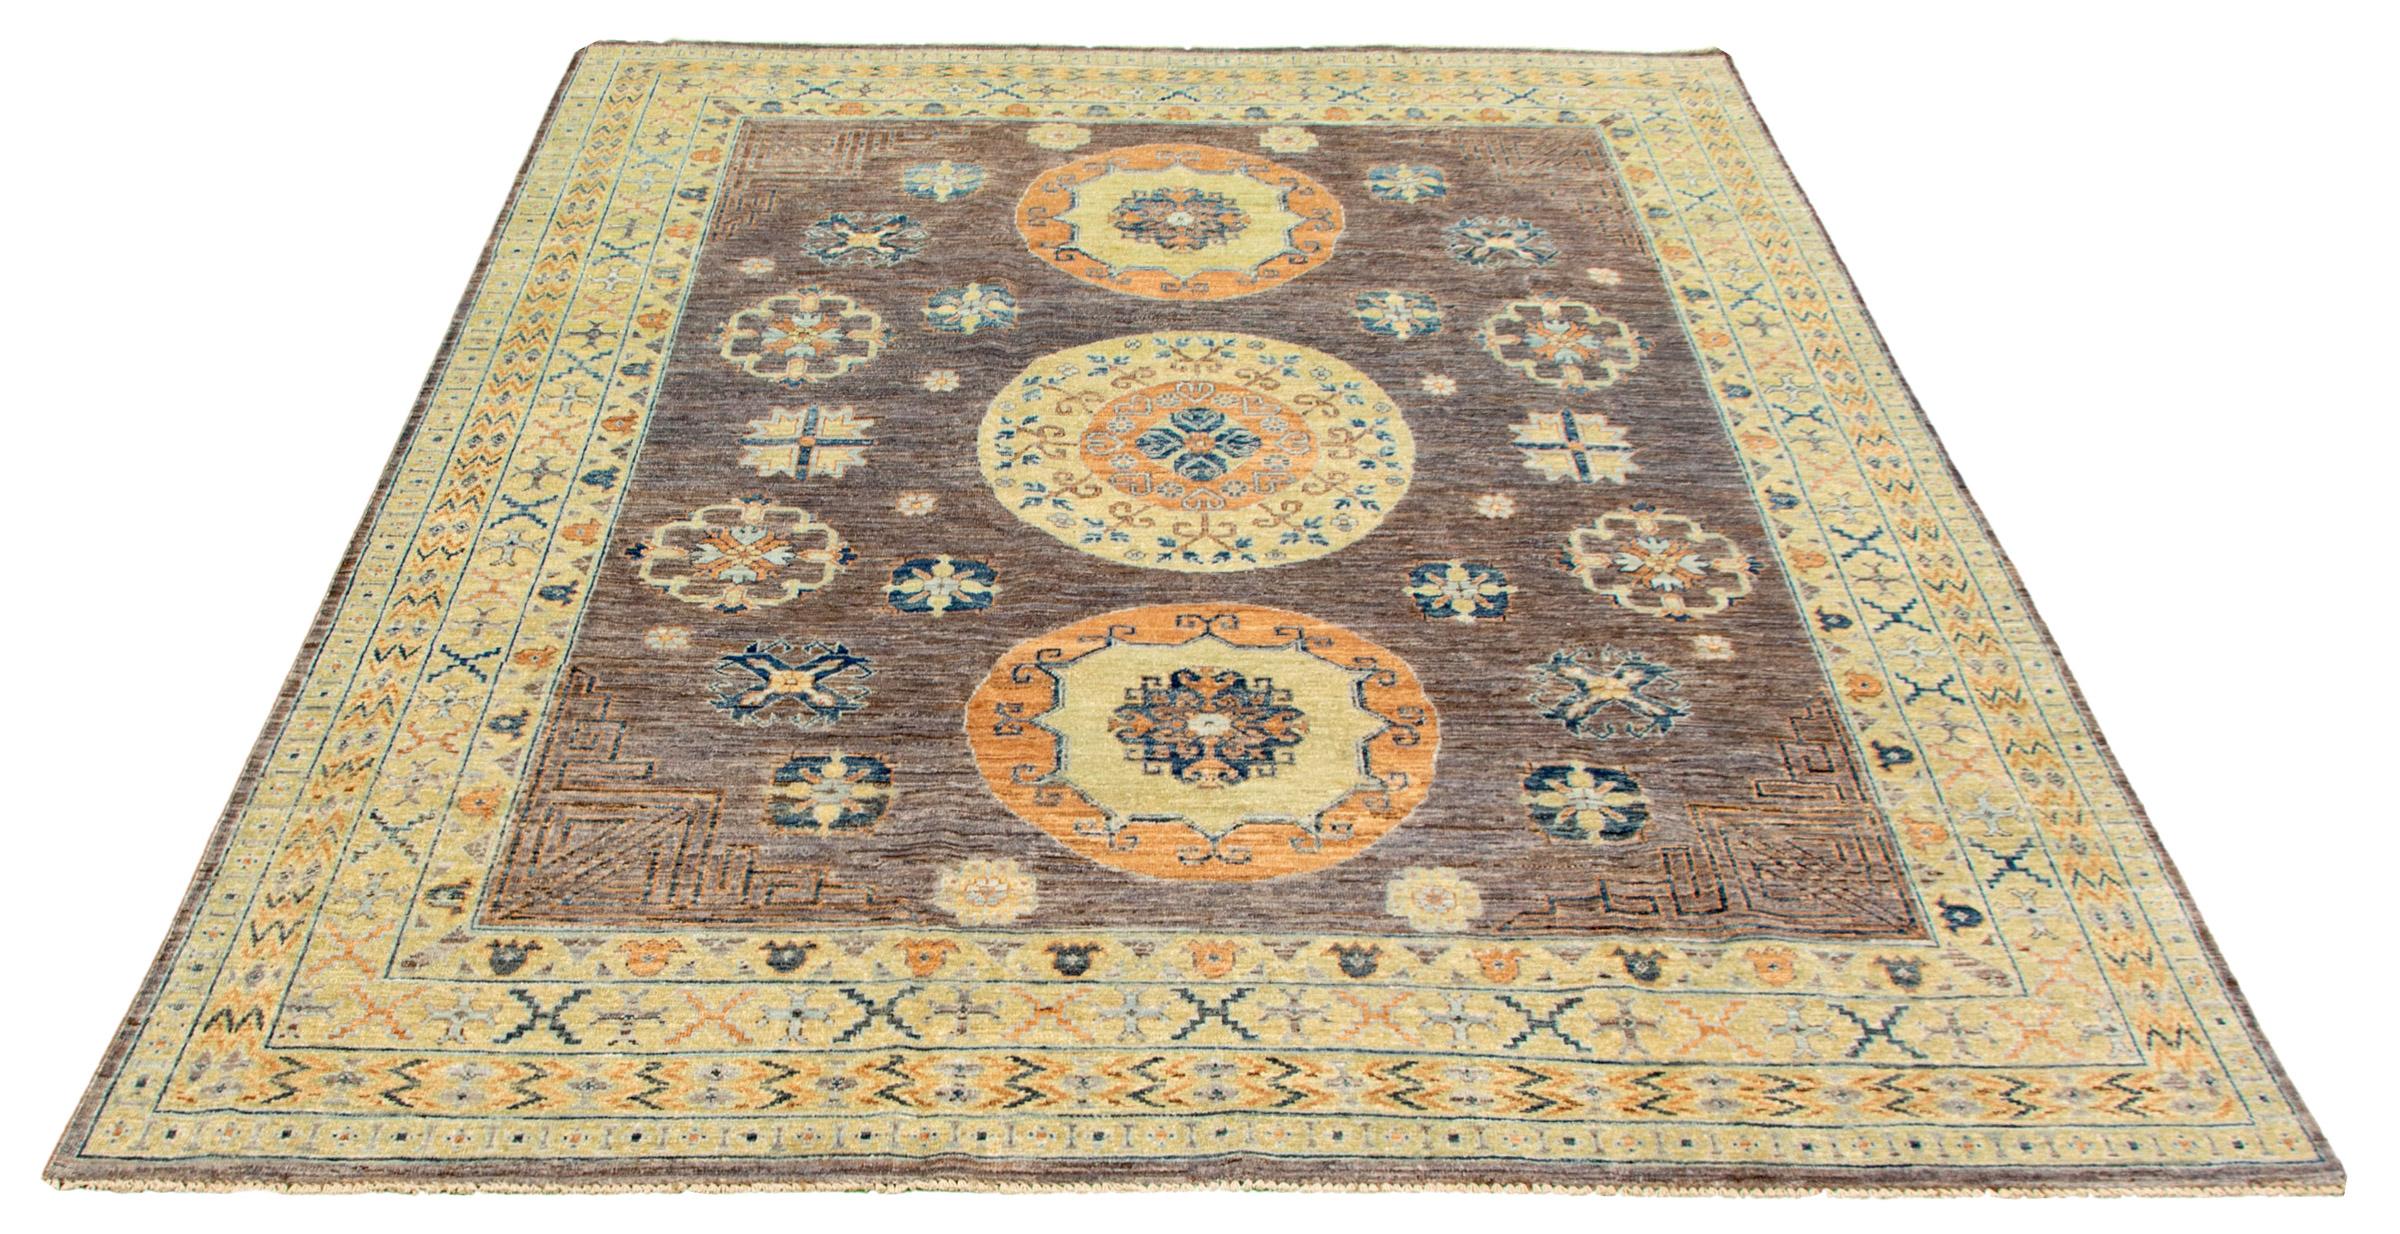 Vegetable Dyed Inviting Transitional Persian Oushak & Khotan Carpet - 8'x10'